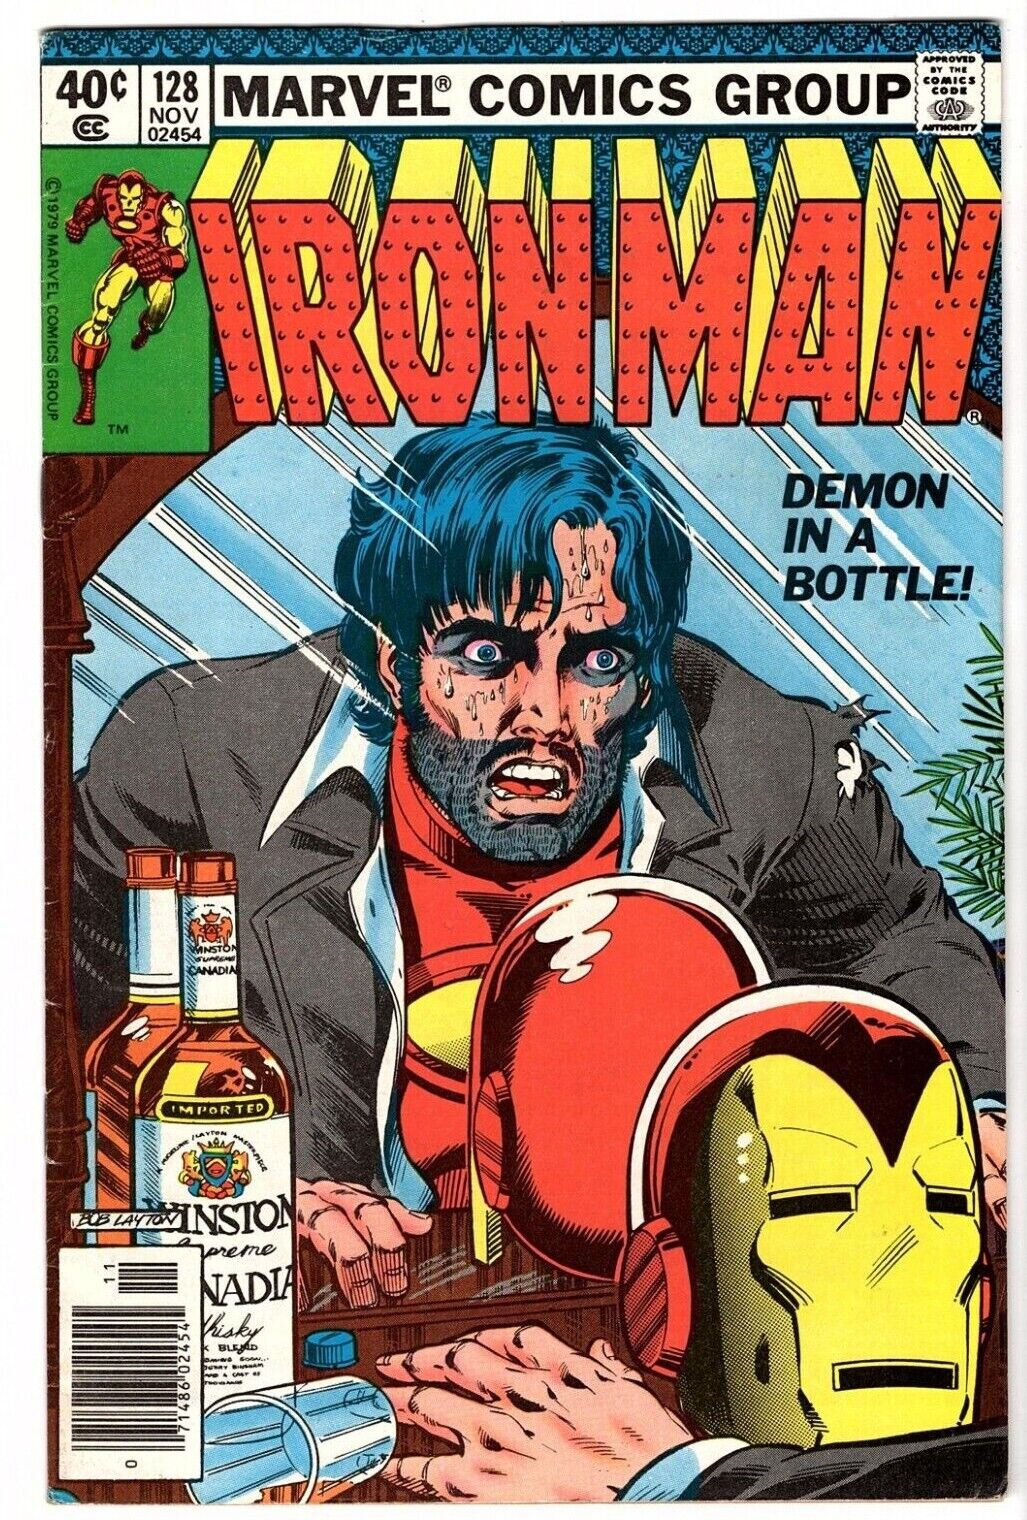 Iron Man # 128 (Marvel)1979 - Demon In A Bottle storyline - VG/FN - Newsstand